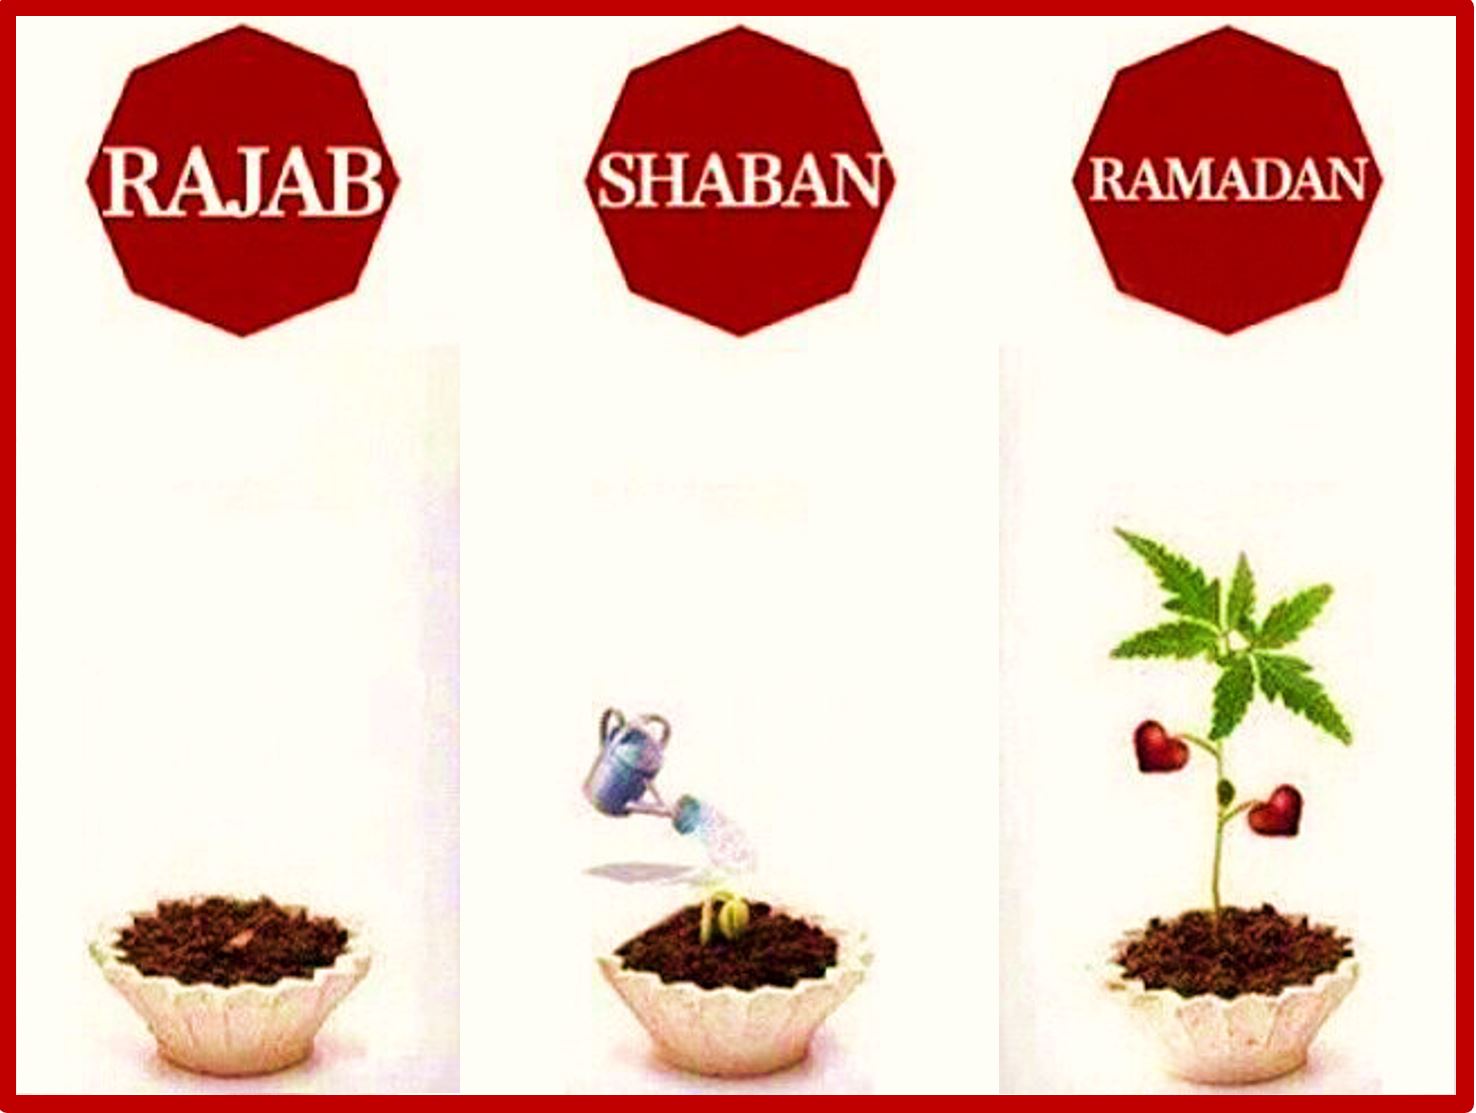 Rajab Shaban Ramadan Plant Seeds